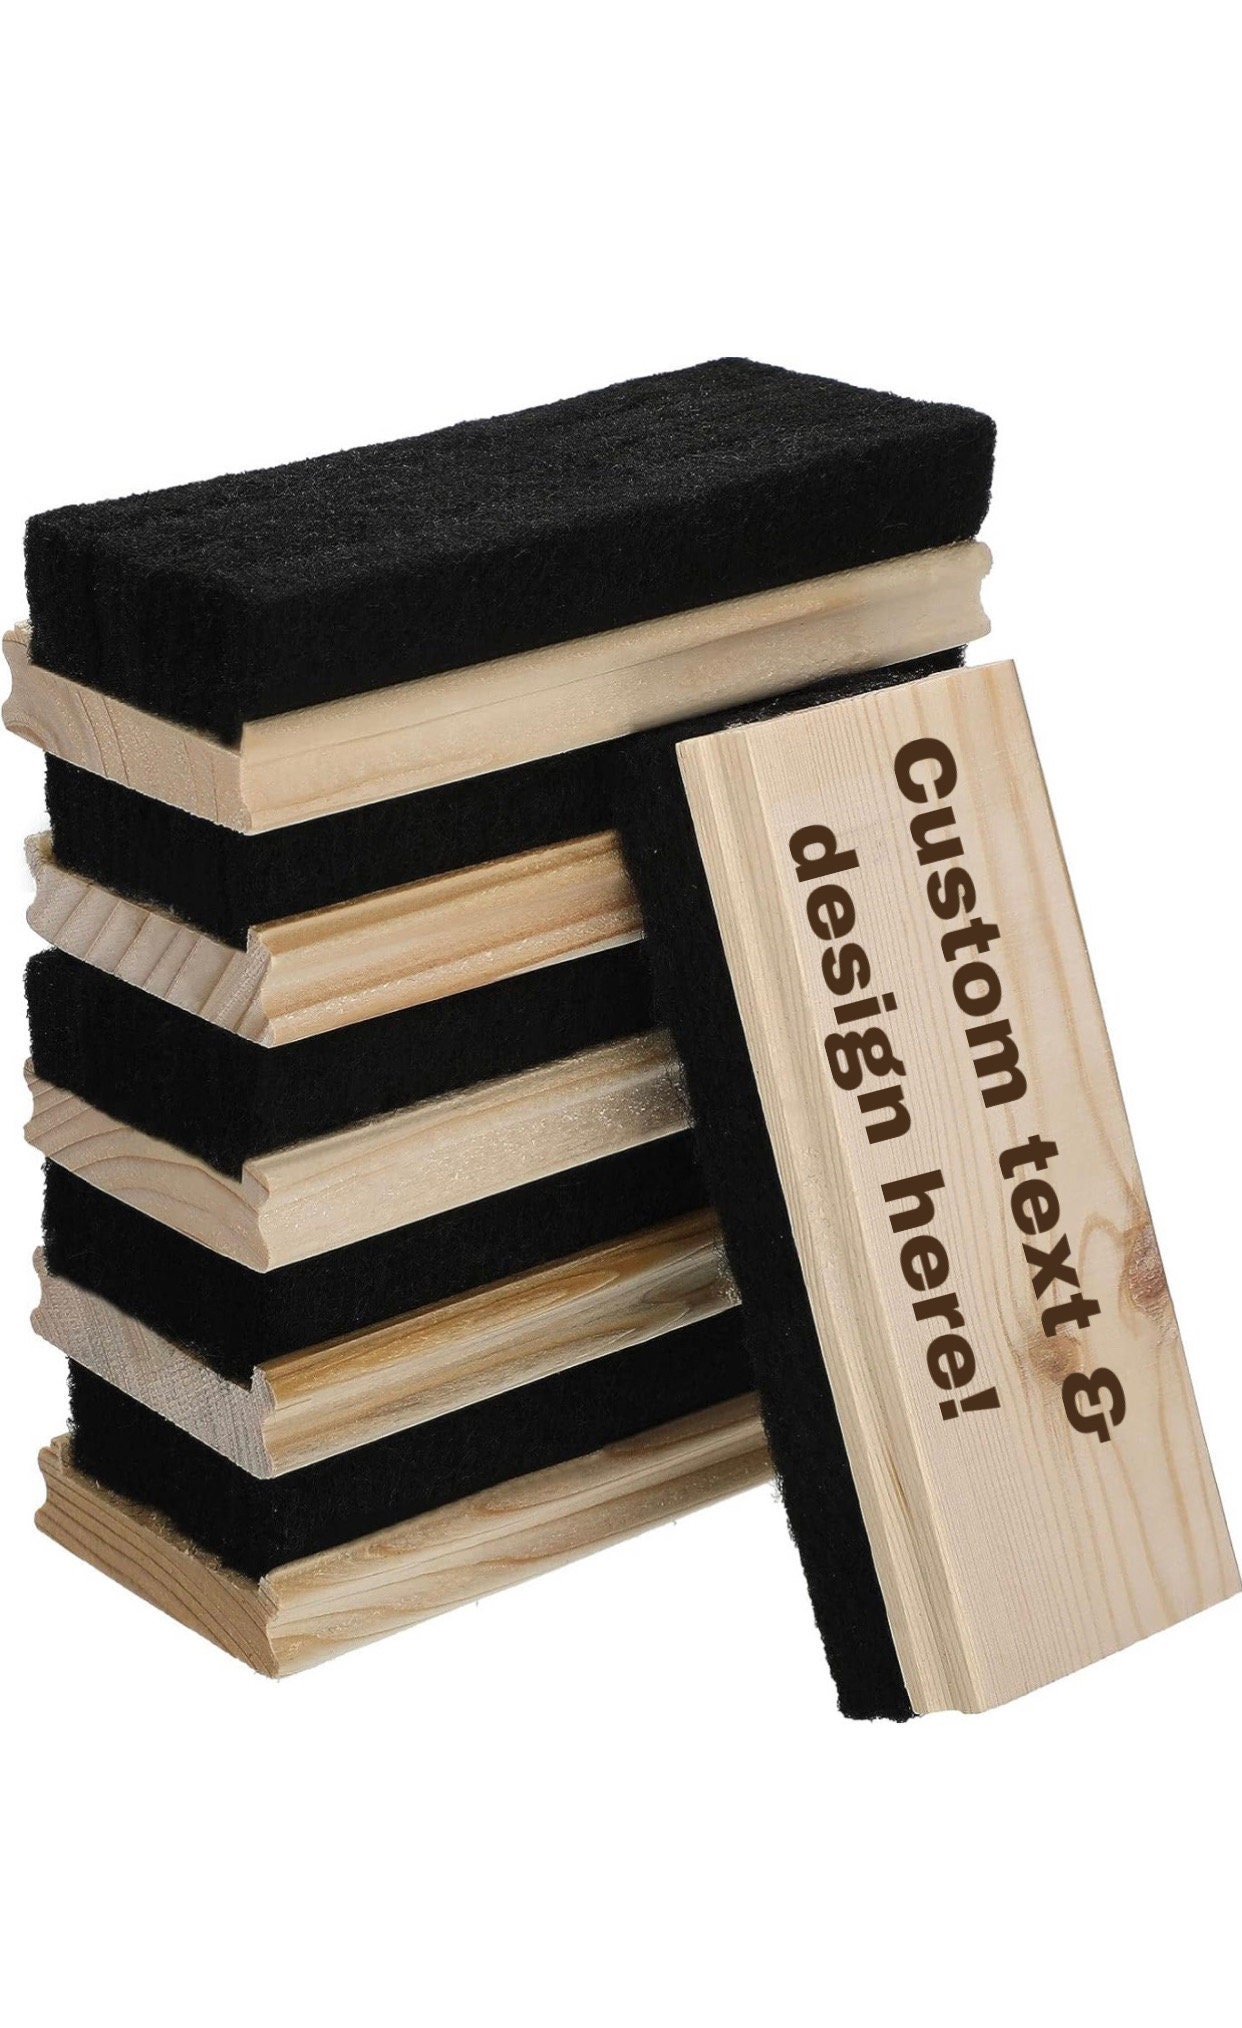 Chalk and Dry Erase Board Black Felt Eraser, 1 each - Pay Less Super Markets